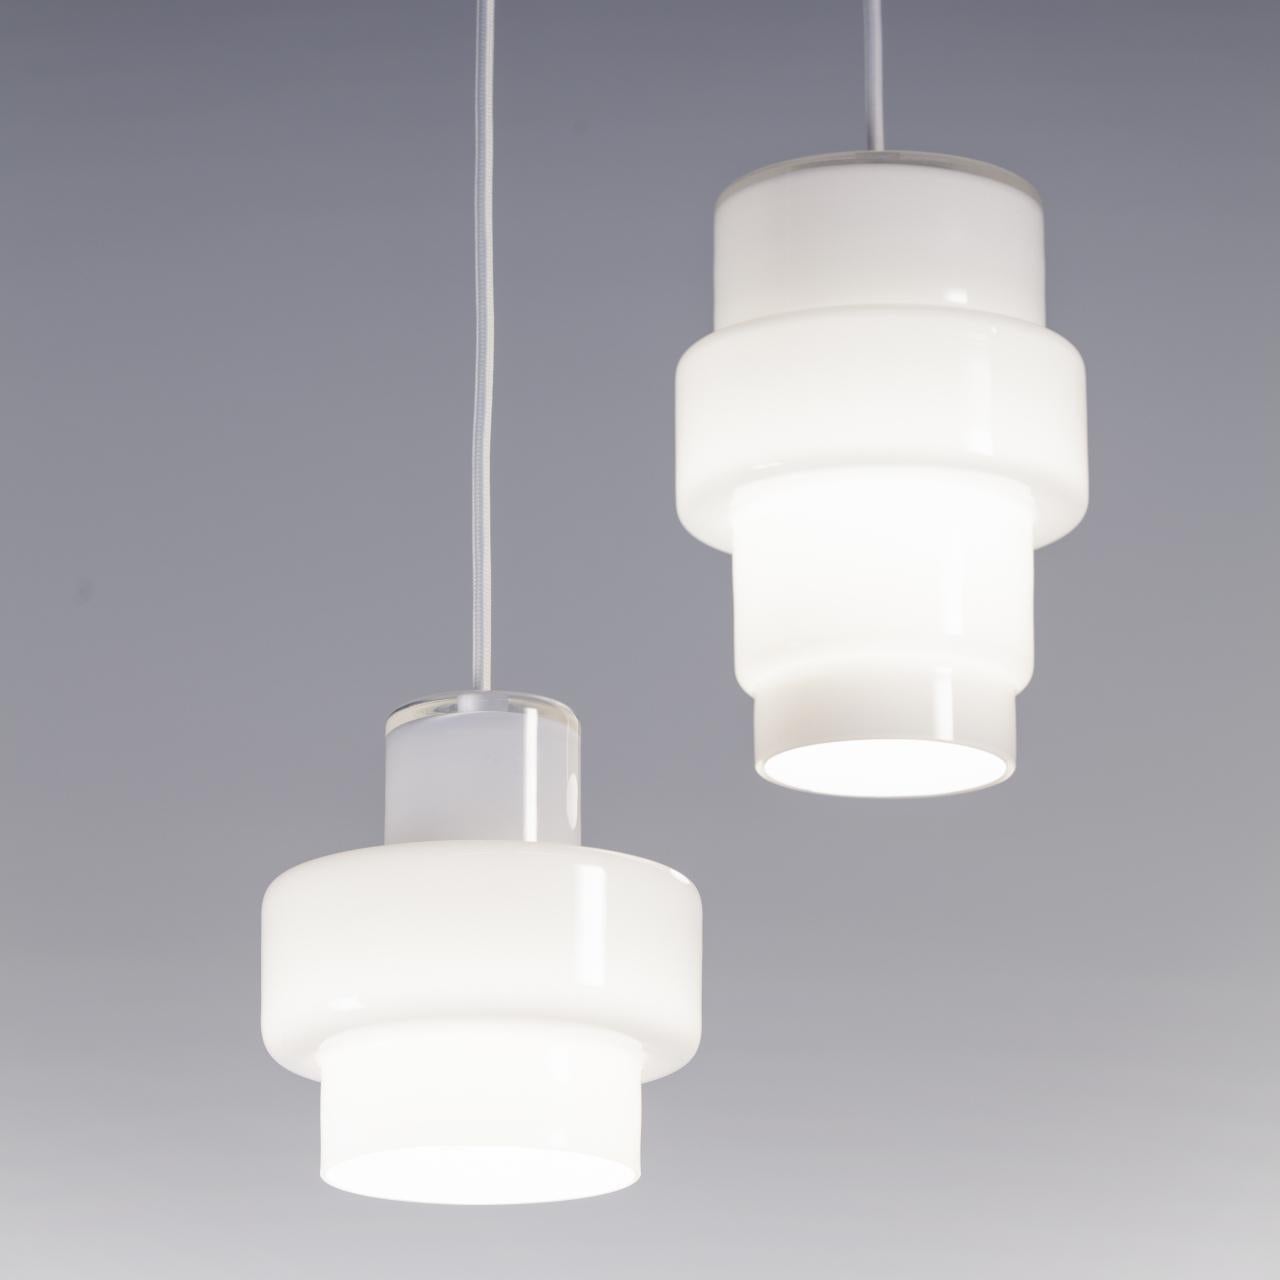 Scandinavian Modern 'Multi L' Glass Pendant in White by Jokinen and Konu for Innolux For Sale